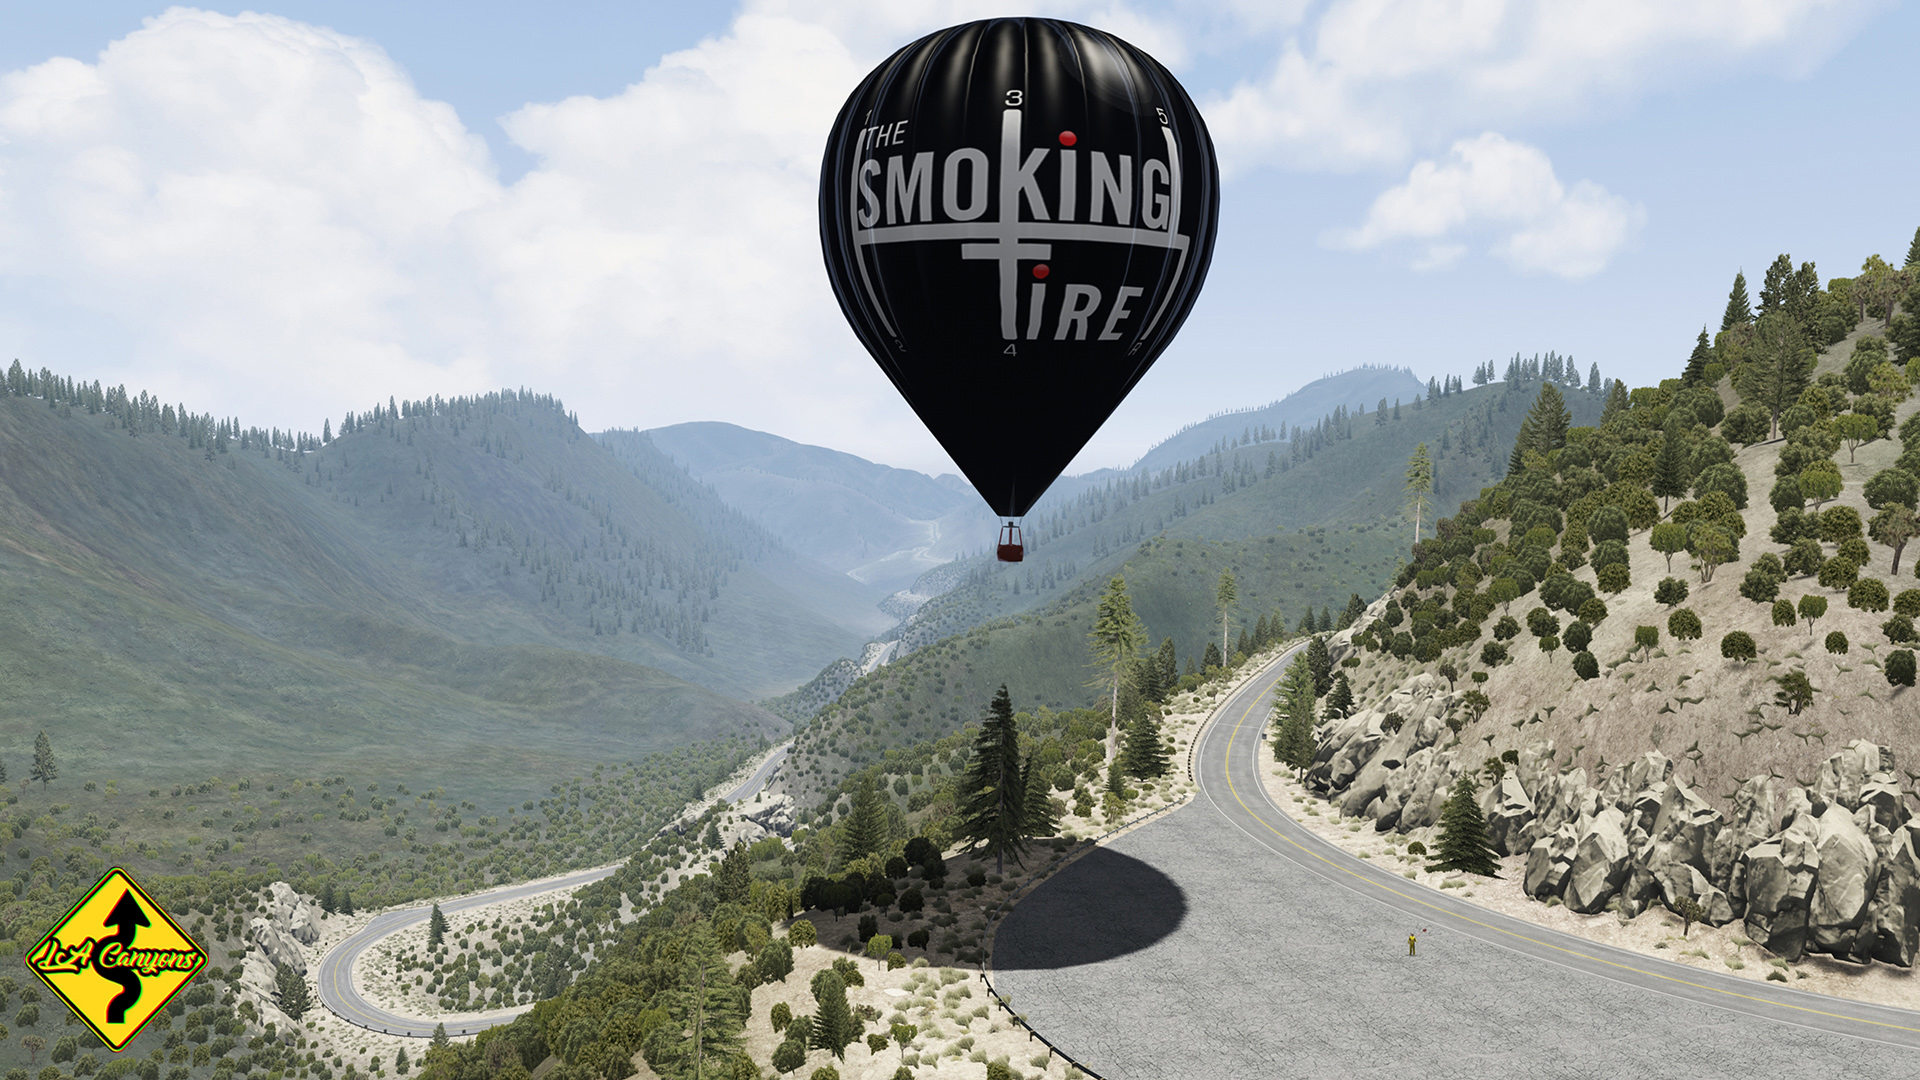 balloon_smoking_tire_01.jpg